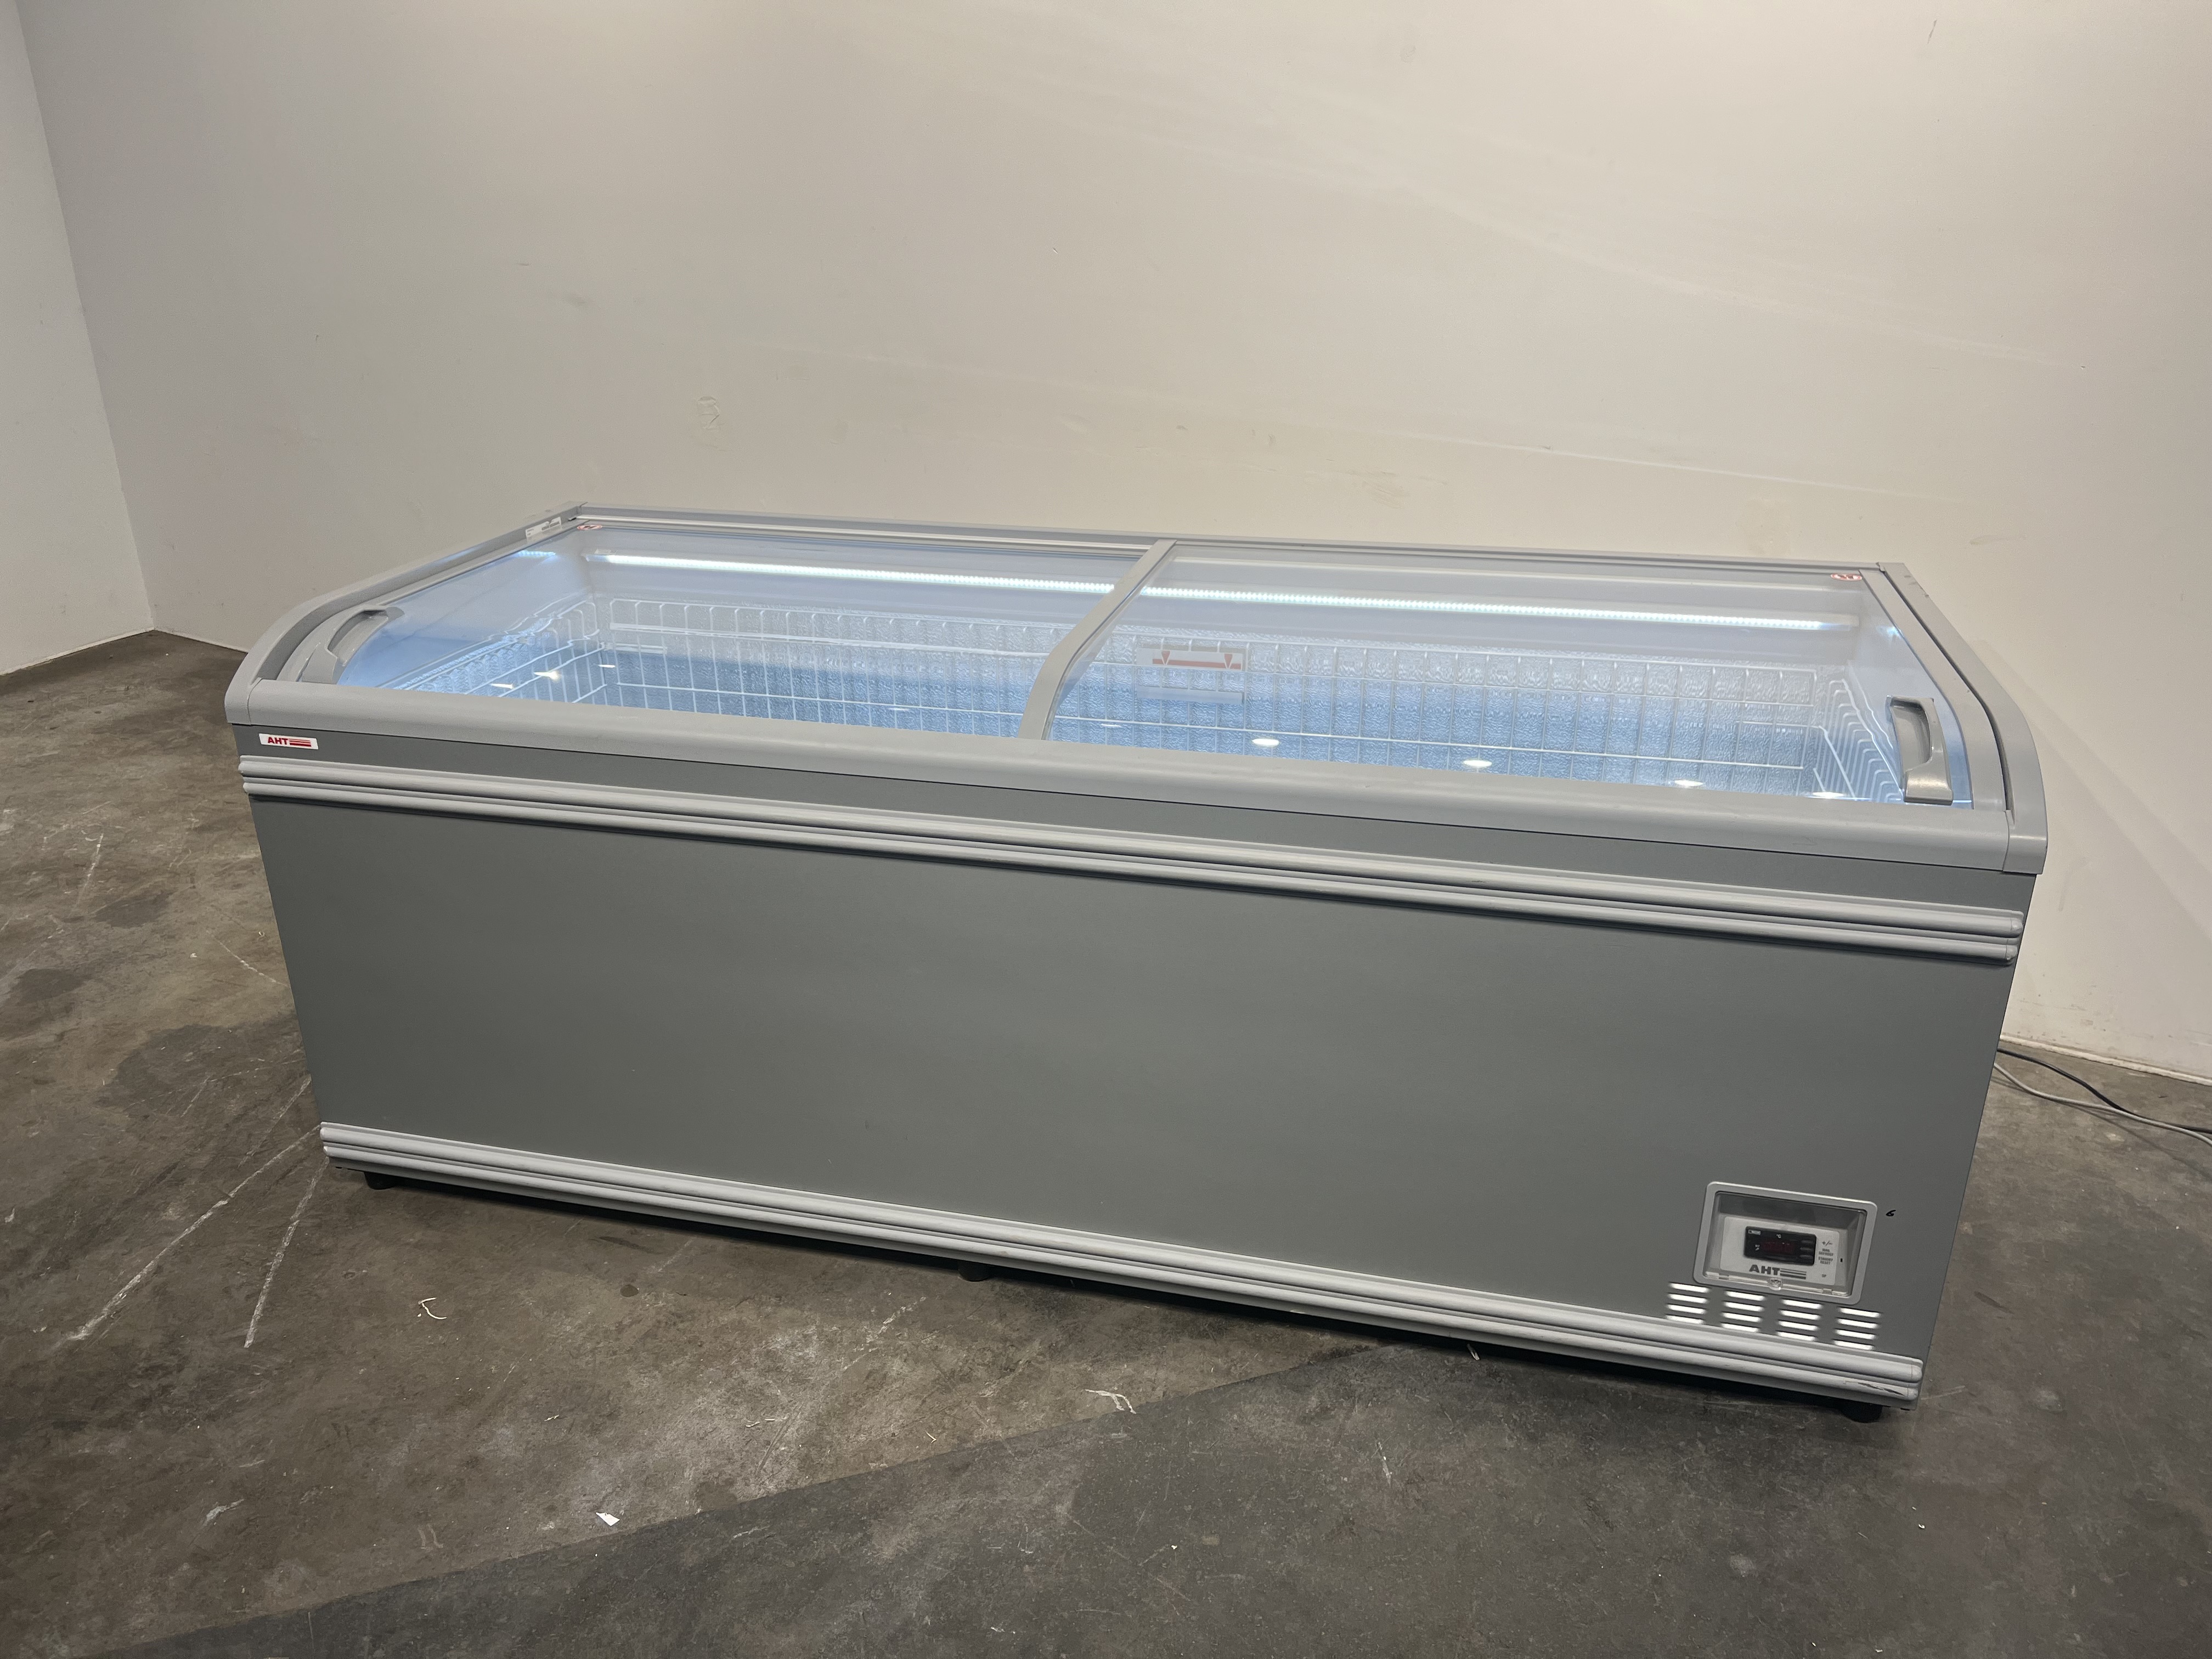 DEEP freezer / deep freezer AHT Paris 210 (-), used